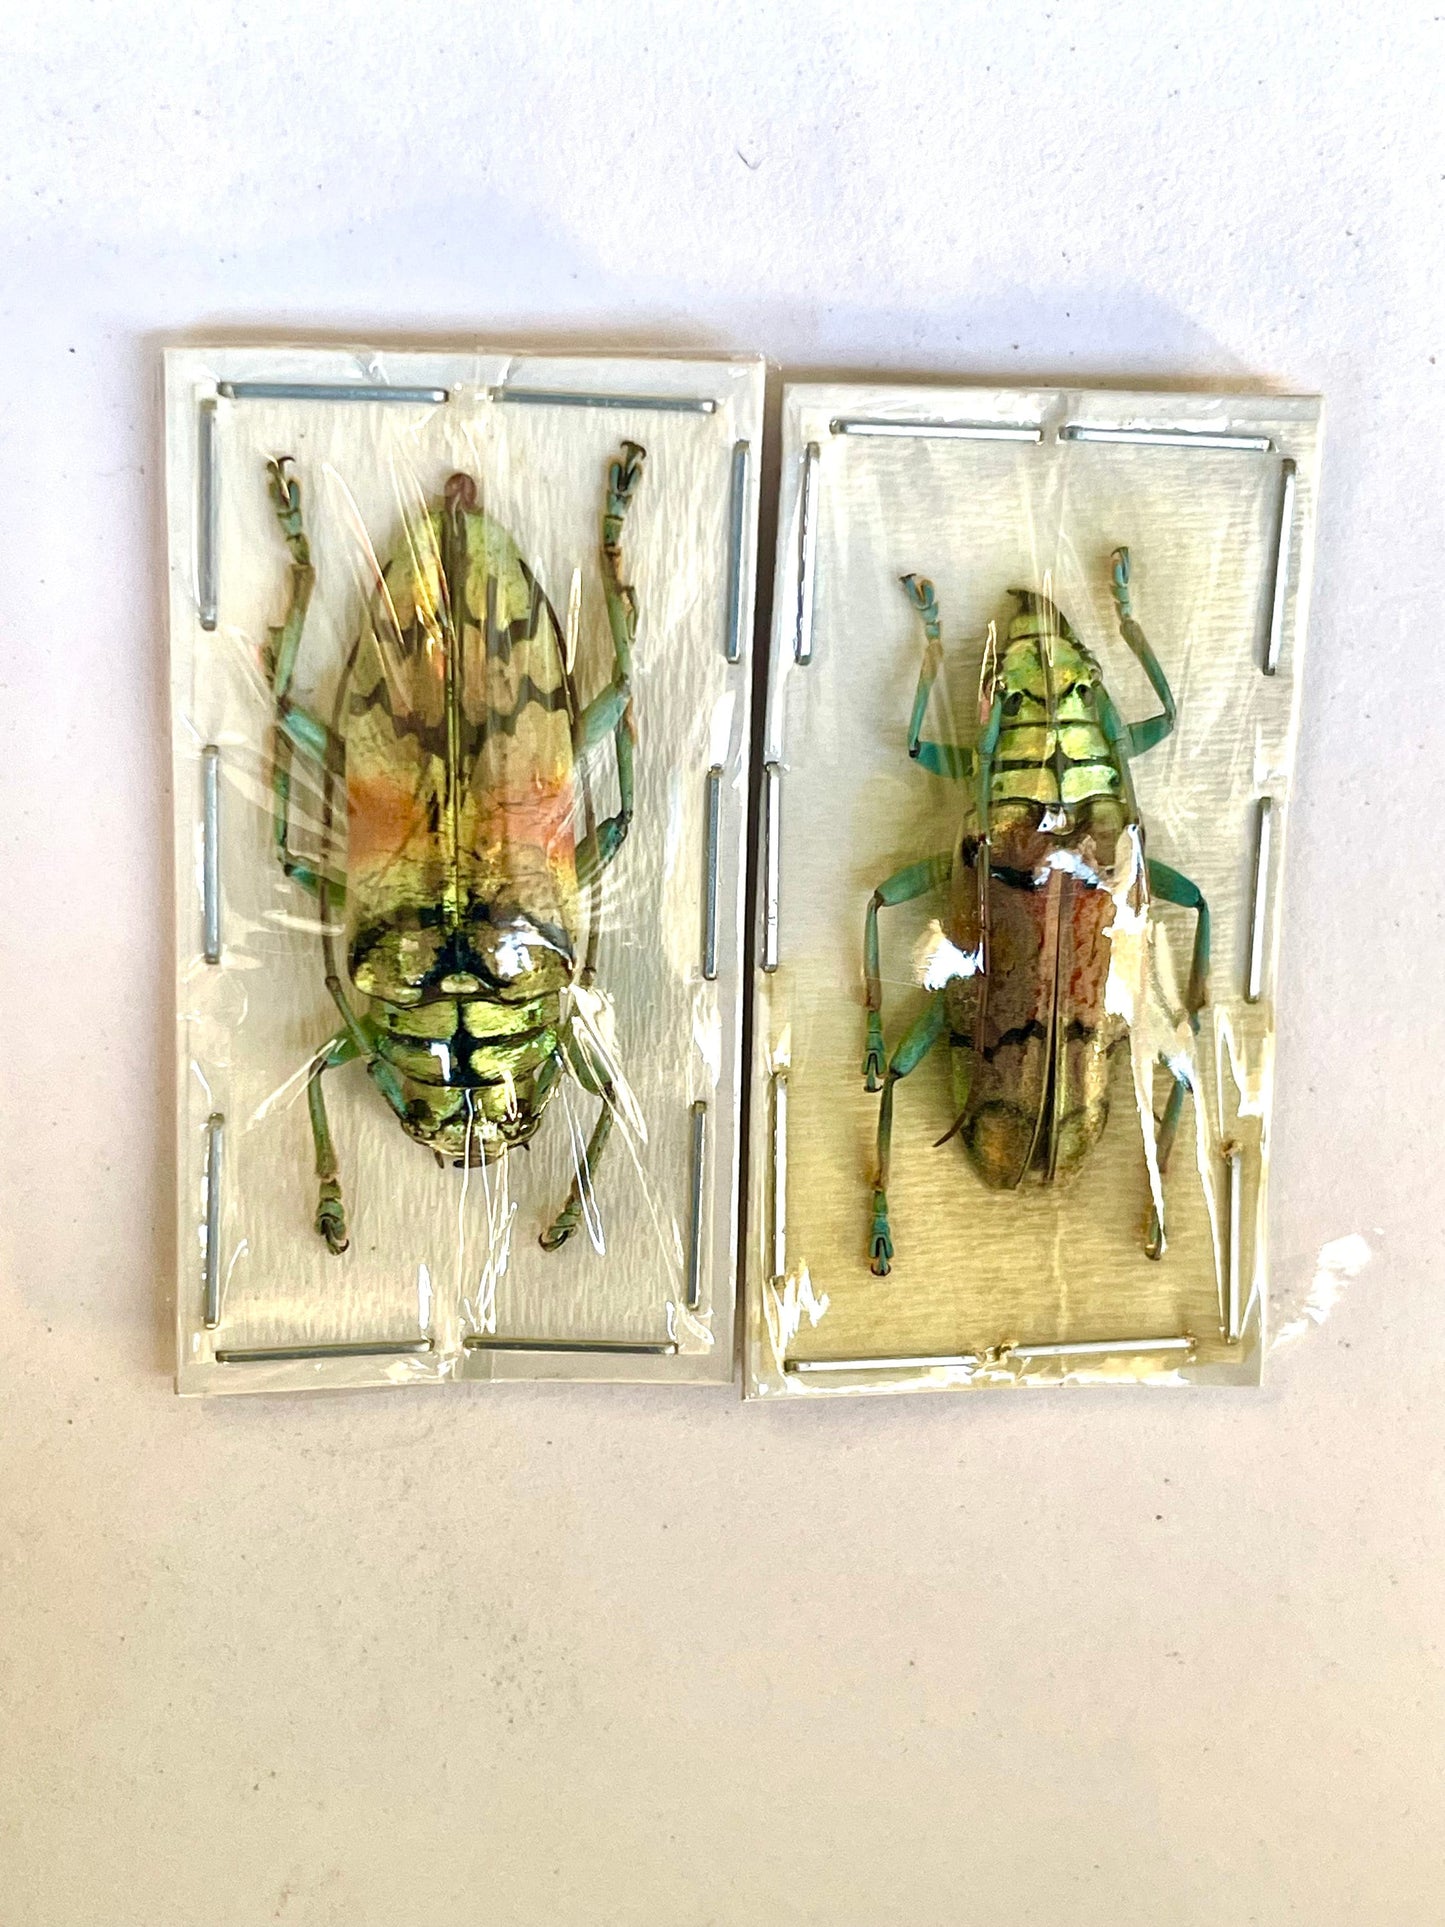 Longhorn Beetle Tmesisternus rafaelae Real Insect Metallic Gold Green A2 Condition